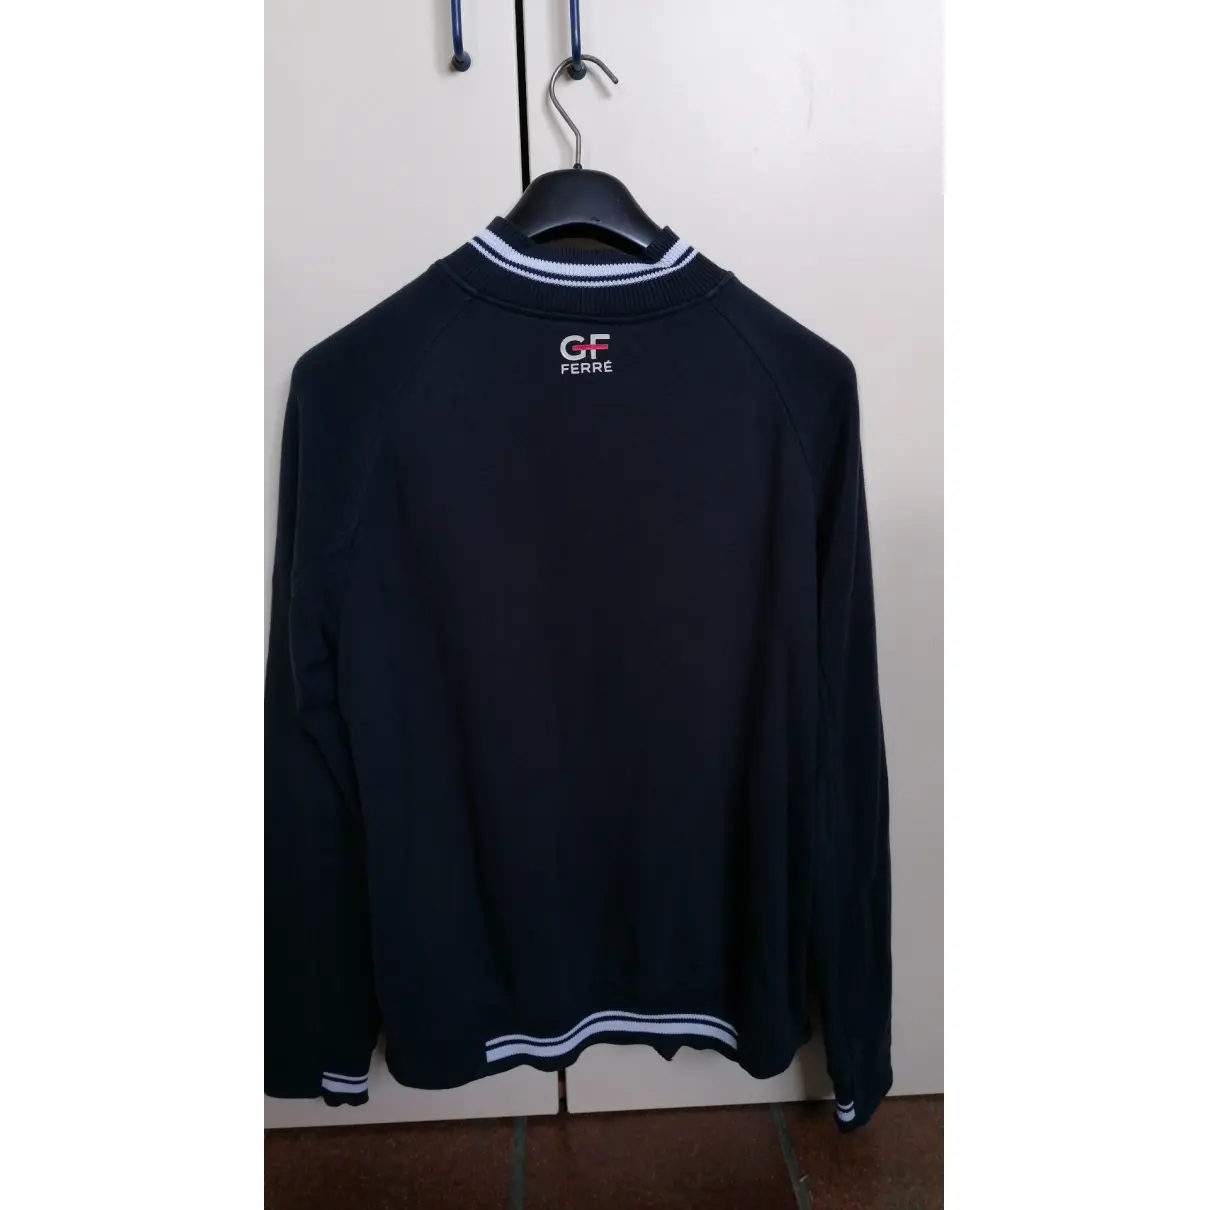 Buy Gianfranco Ferré Sweatshirt online - Vintage